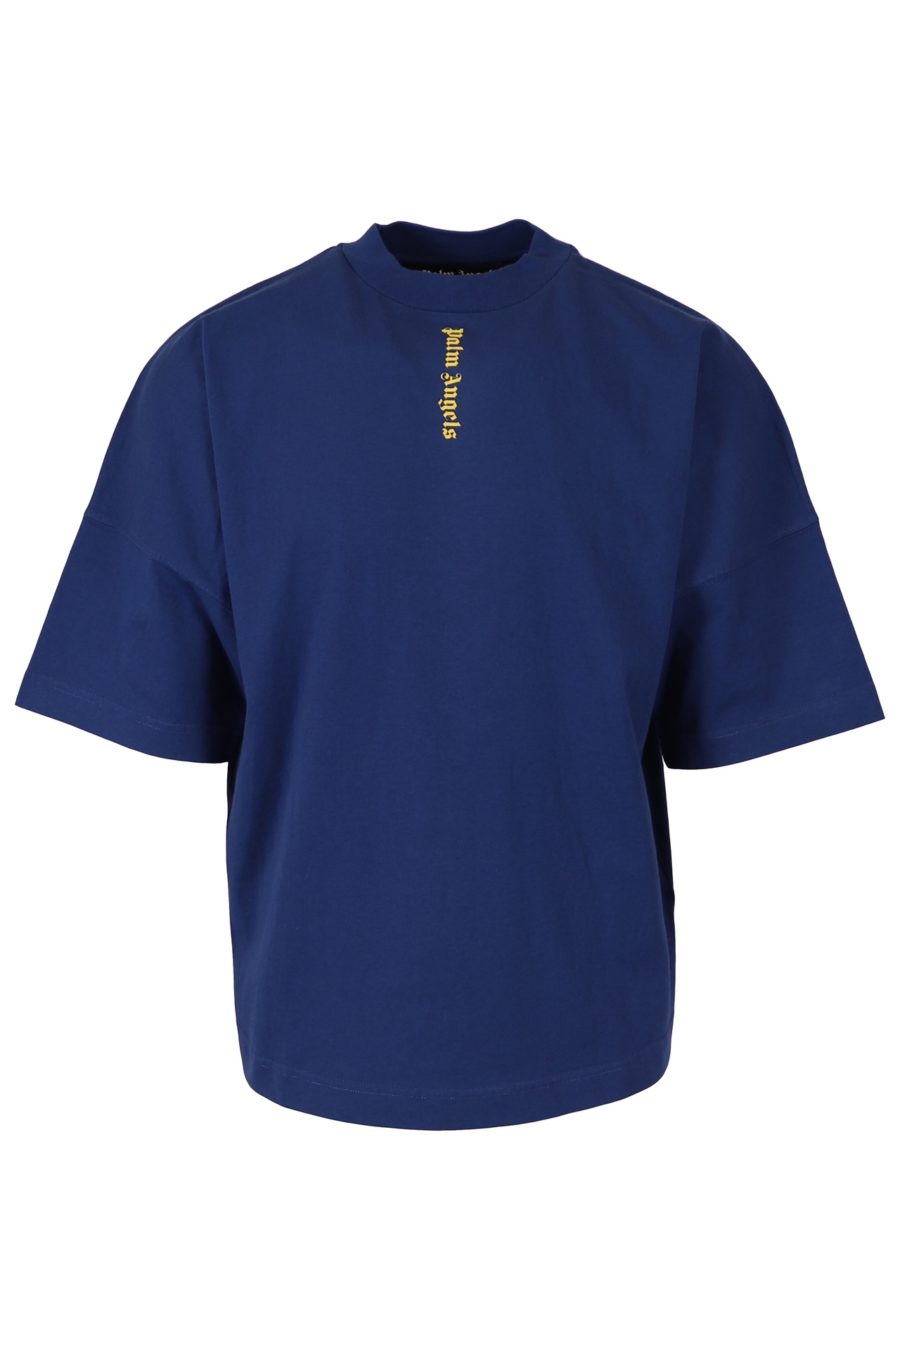 T-Shirt Palm Angels blau mit gelbem vertikalen Logo - 903bc0ec2a8179621e1724c2dbadc8330e1ccbd6